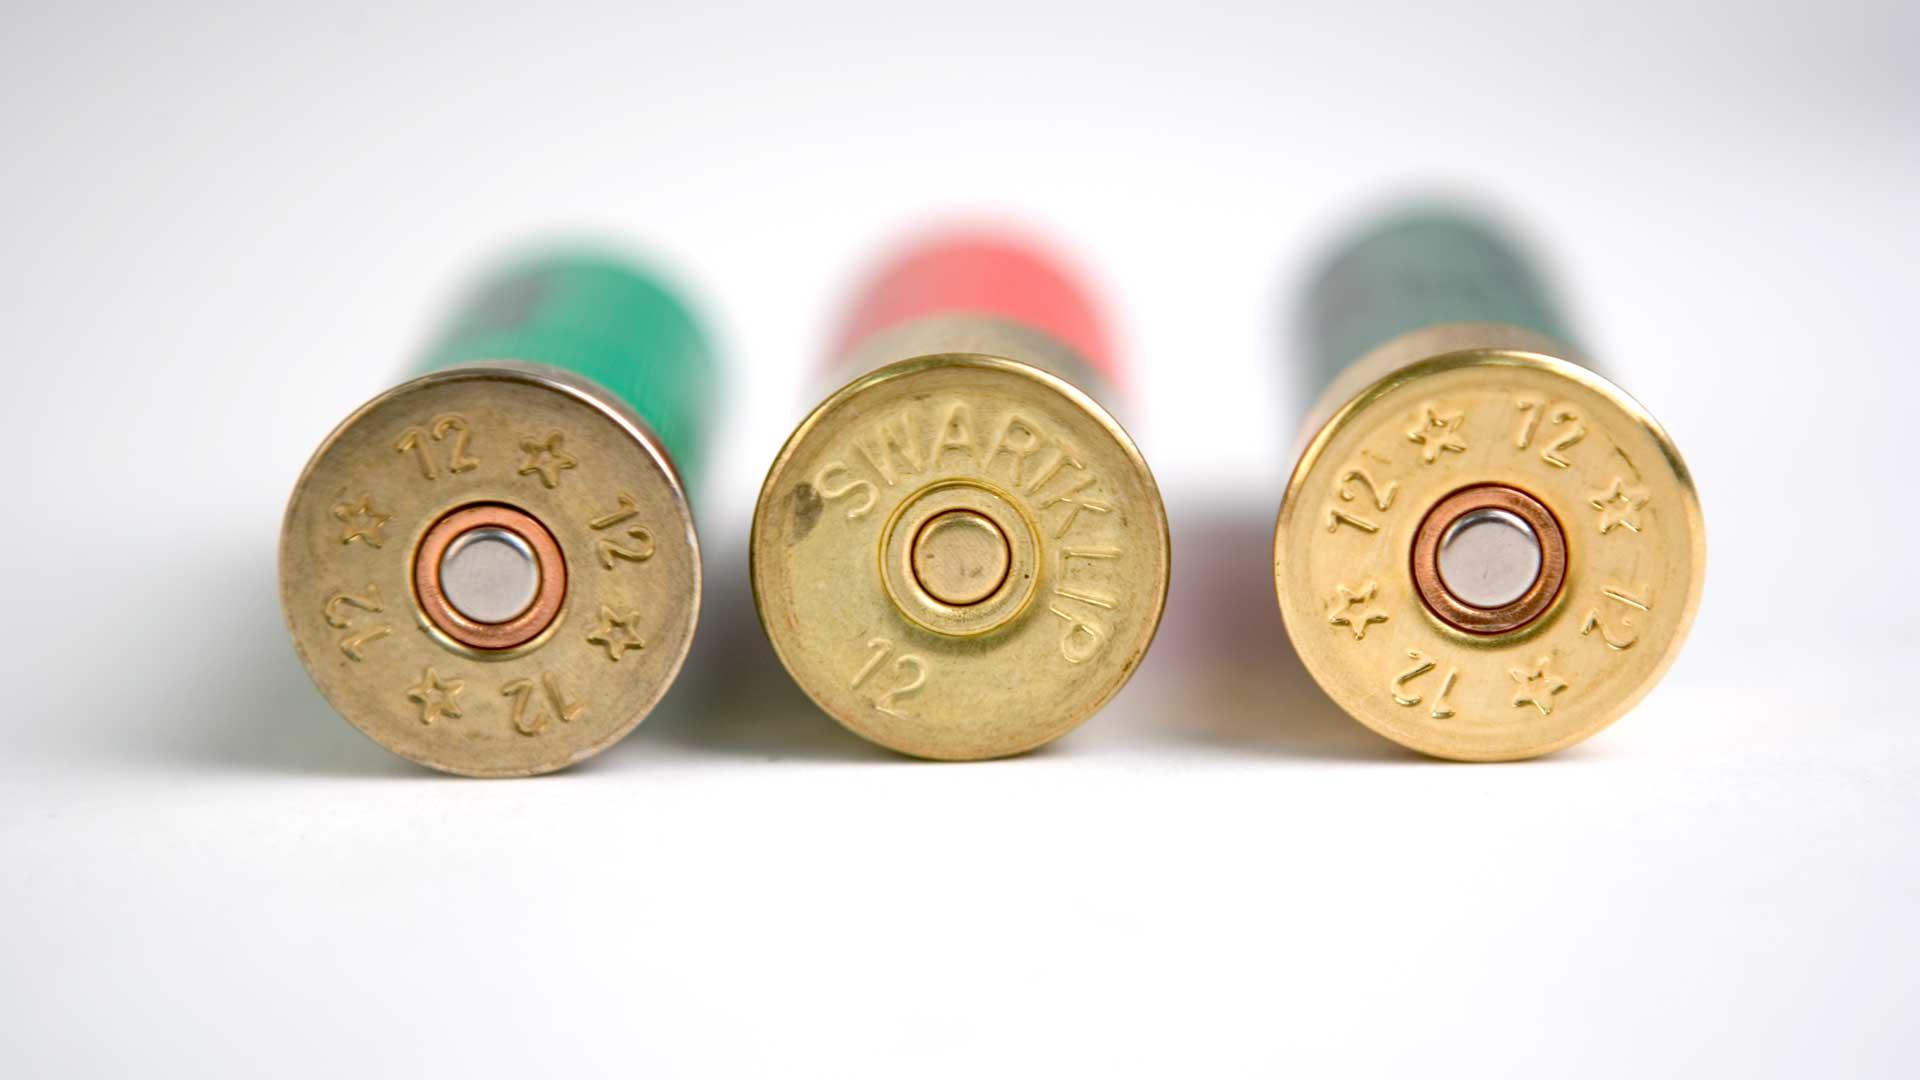 Best Shot Size for Trap – Understanding Shotgun Shells and Their